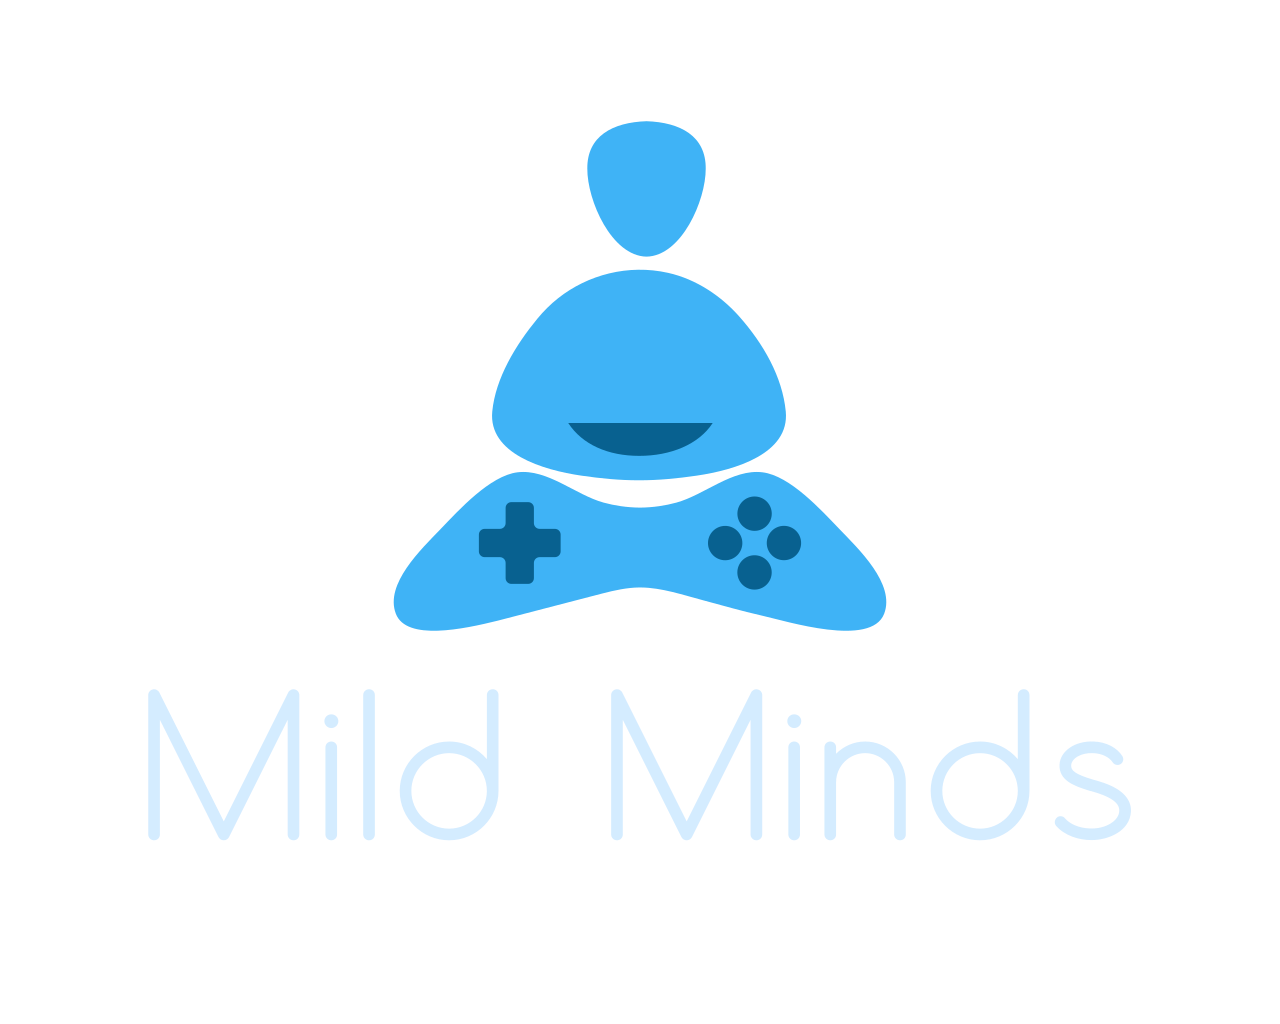 Mild Minds